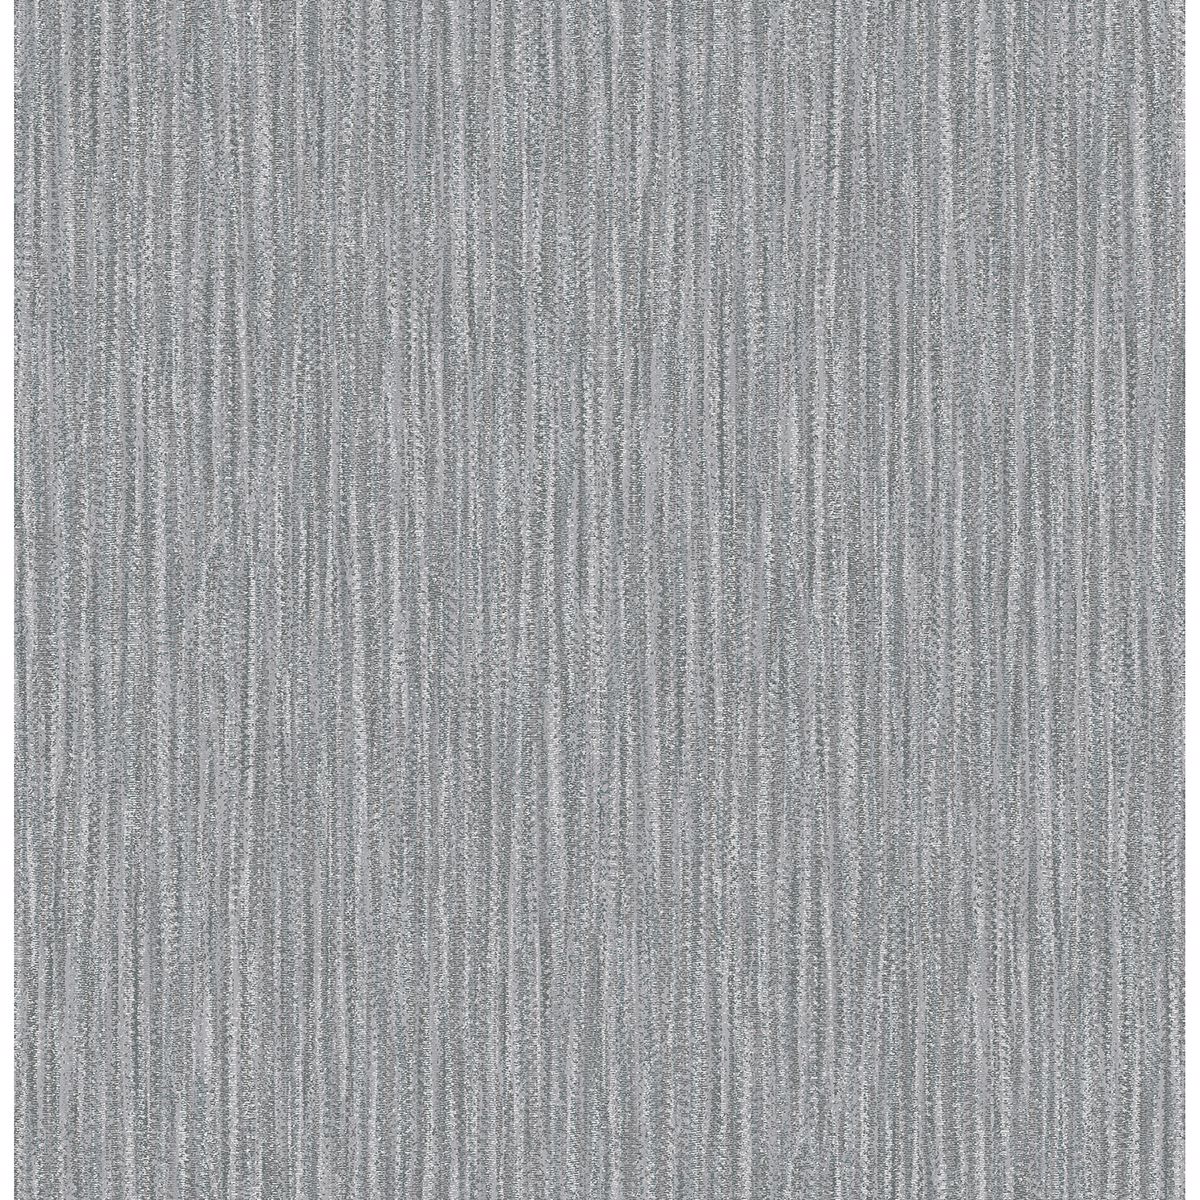 2861-25294 - Raffia Charcoal Faux Grasscloth Wallpaper - by A-Street Prints